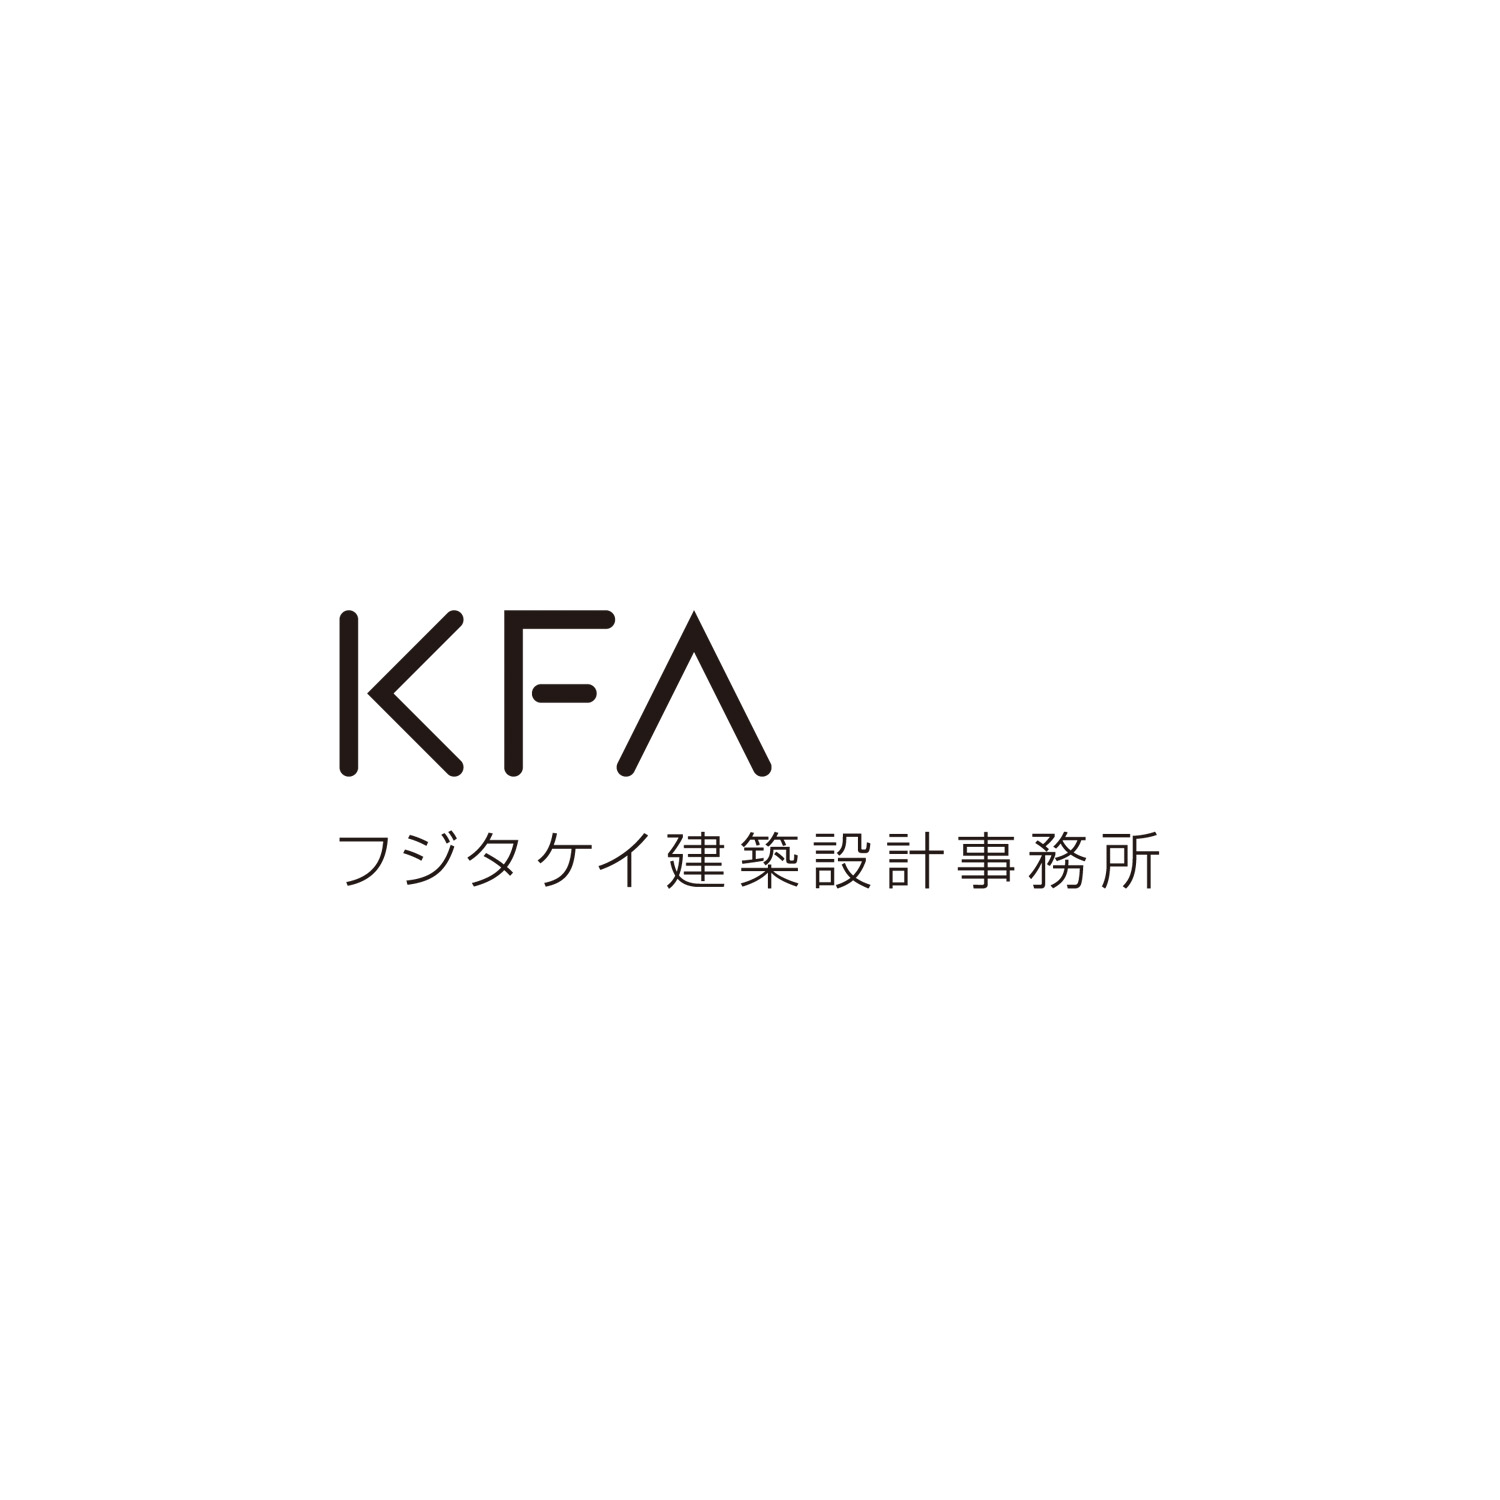 KEI FUJITA ARCHITECTS logo